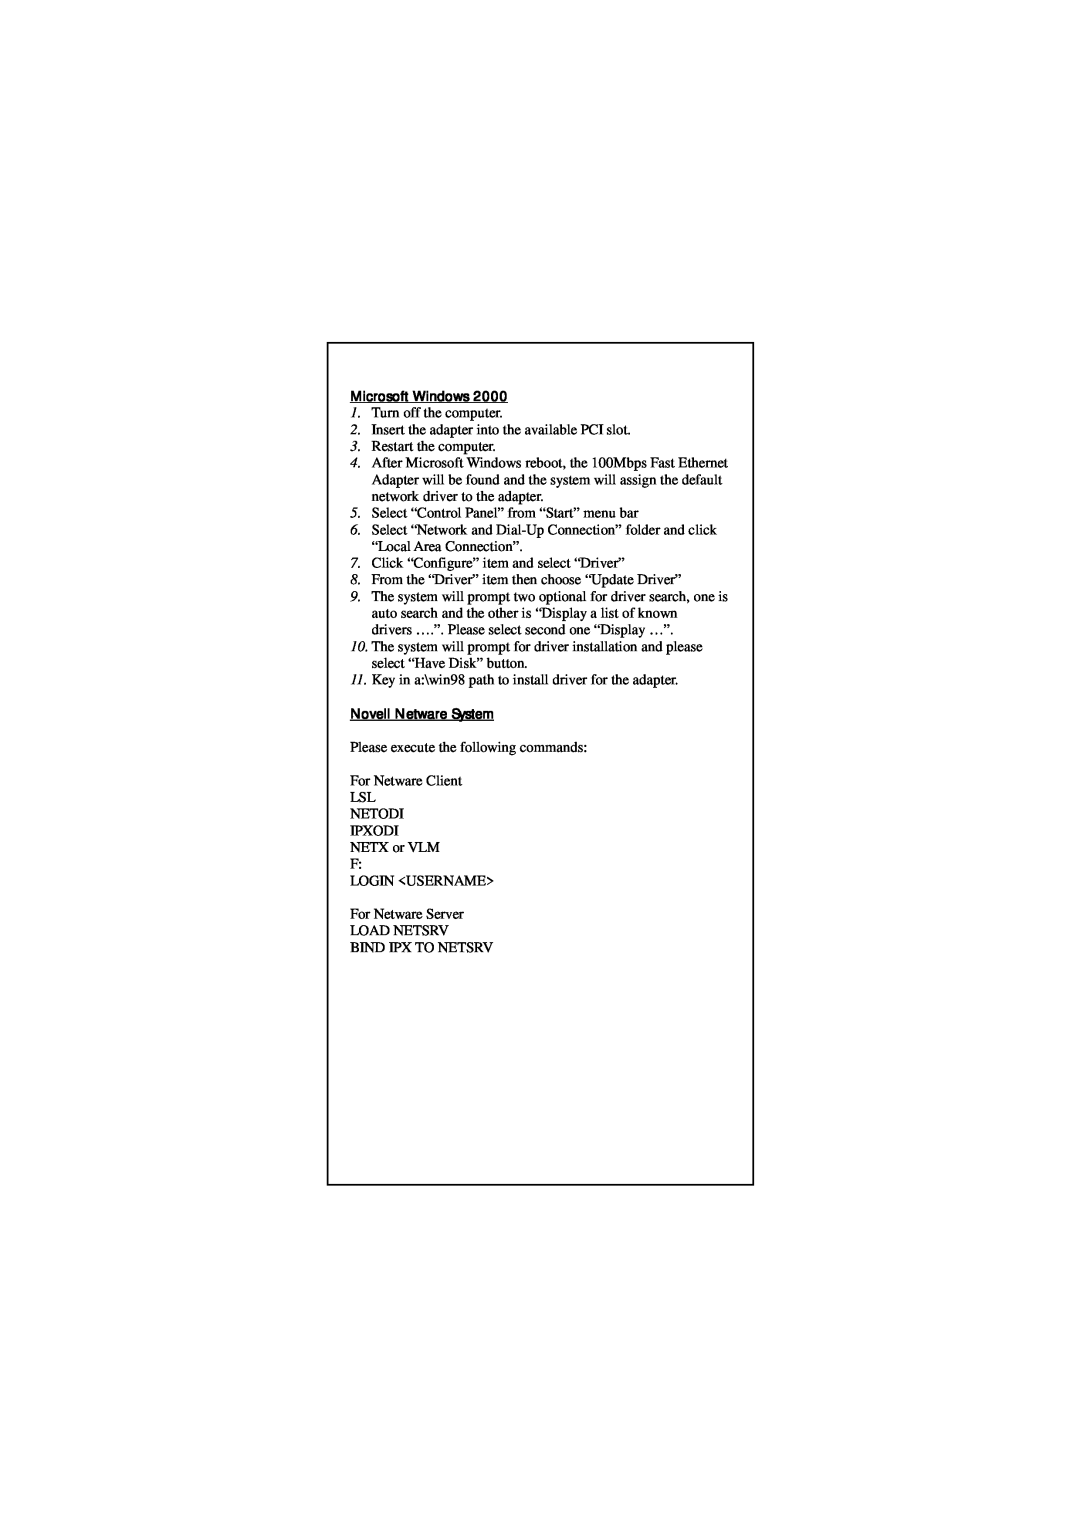 MicroNet Technology SP2515 SERIES manual Microsoft Windows, Novell Netware System 